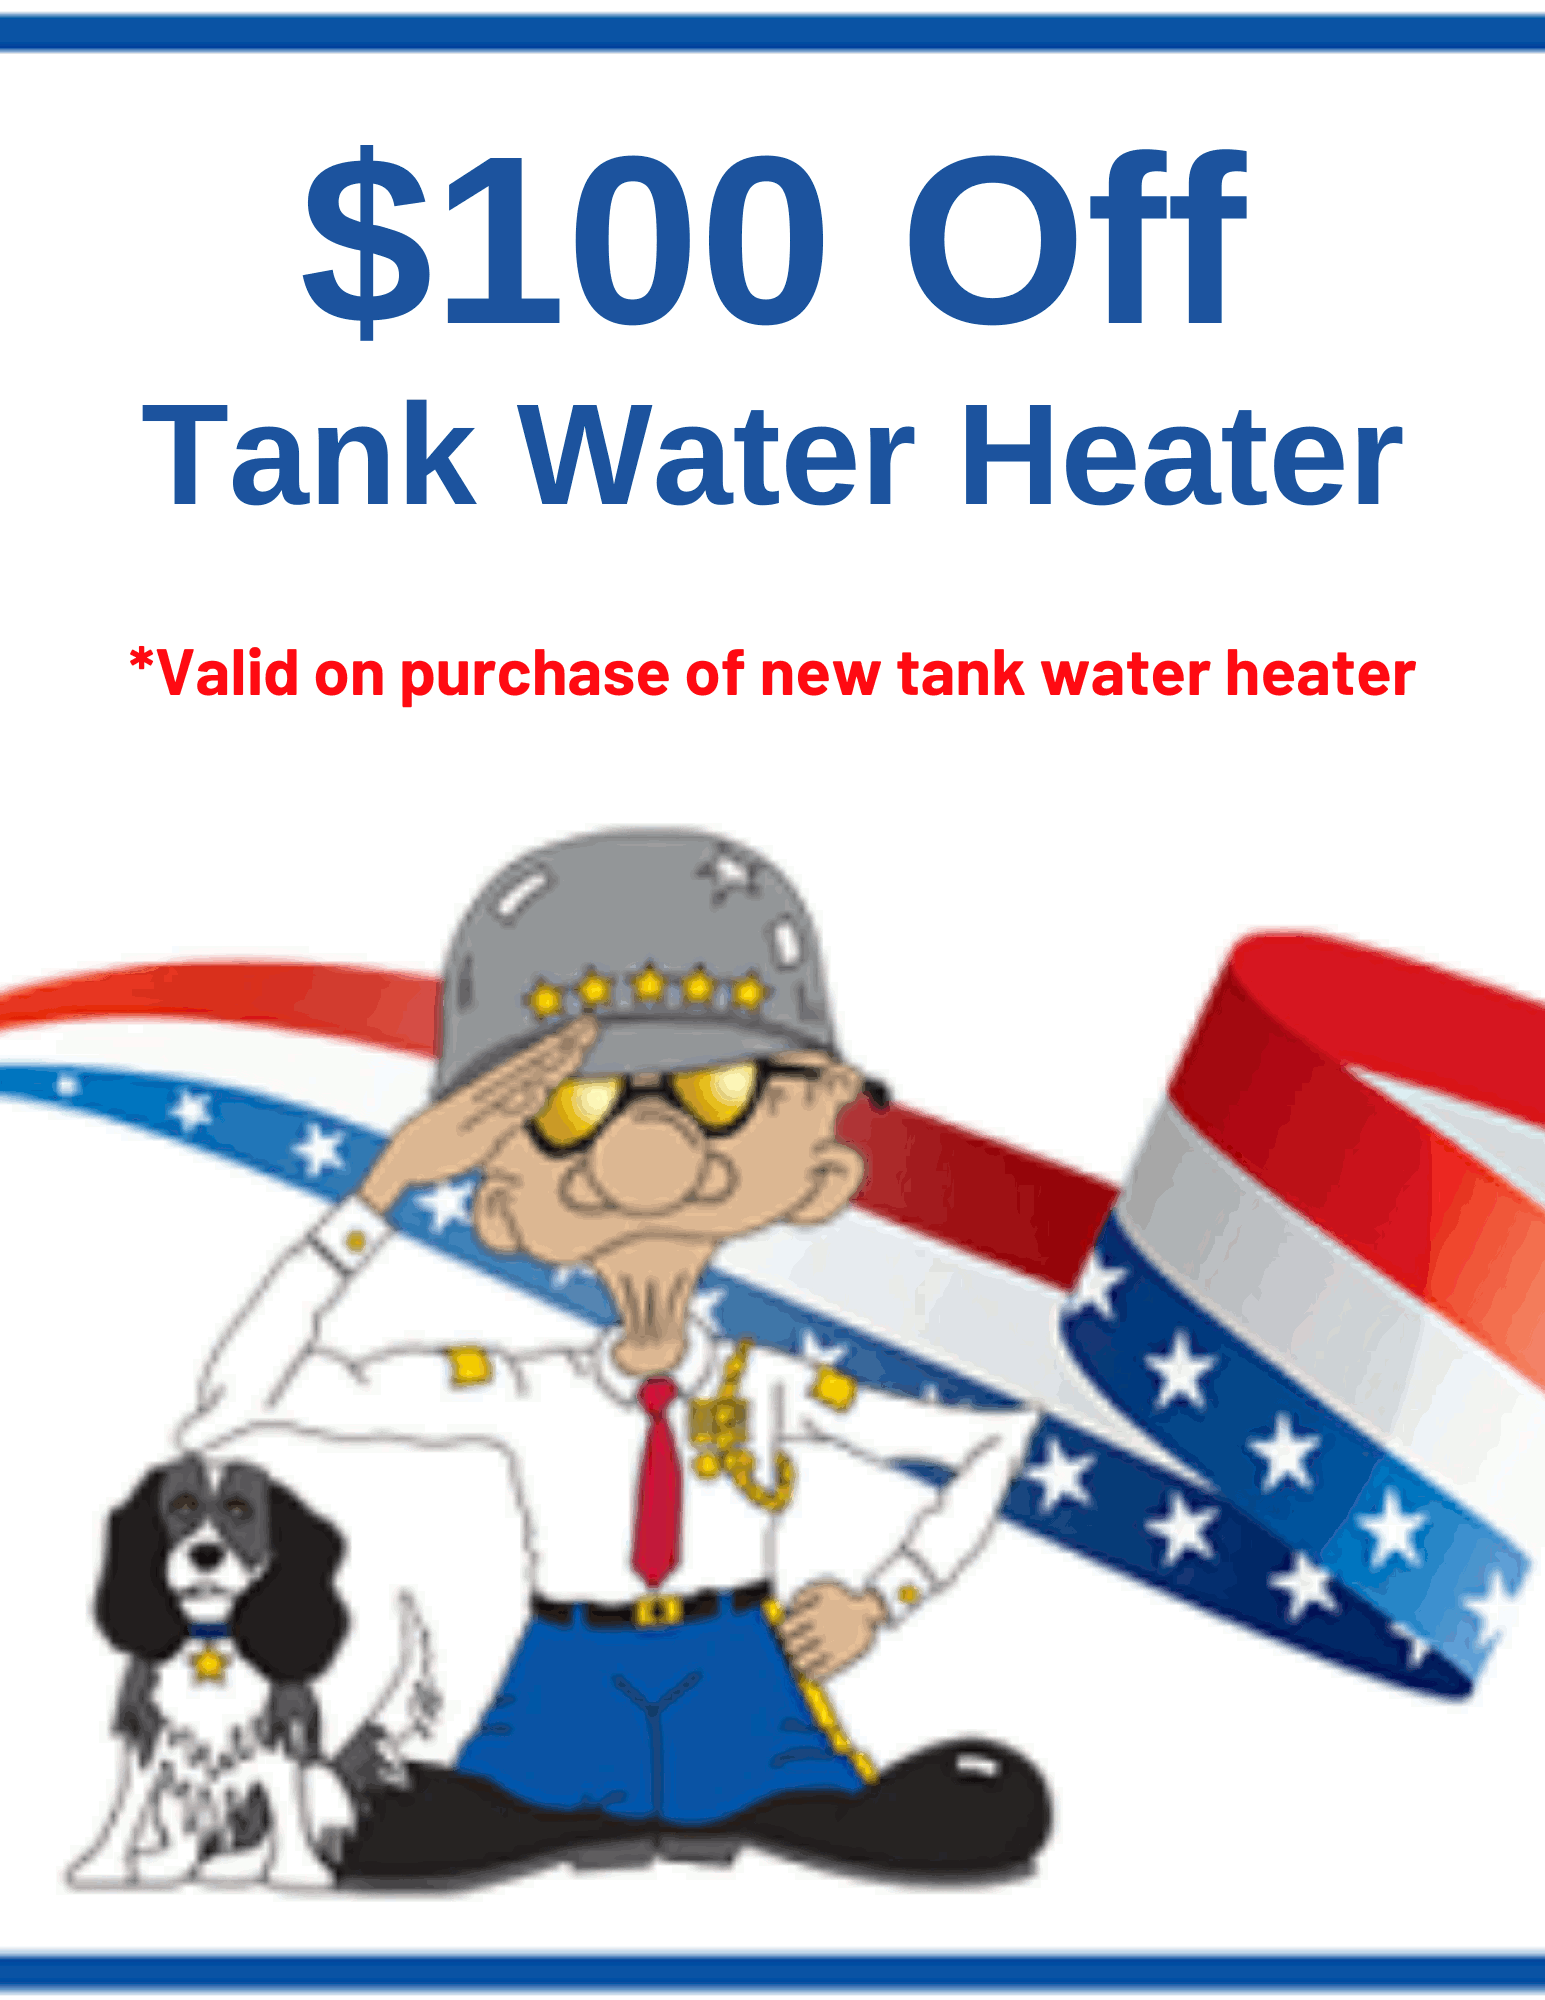 tank water heater coupon General Air Conditioning & Plumbing